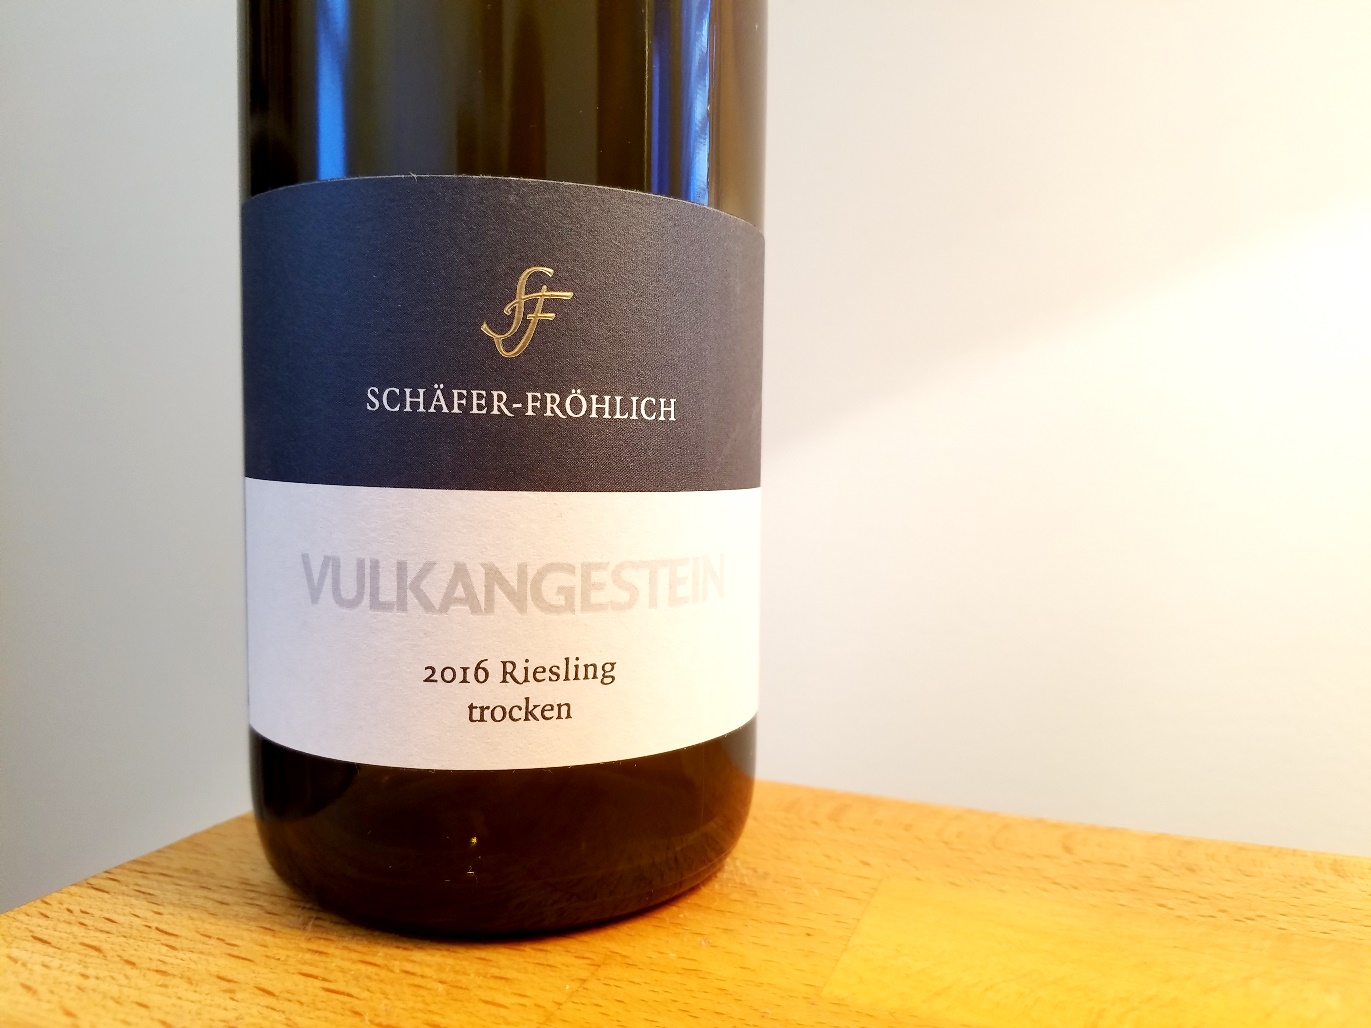 Schäfer-Fröhlich, Vulkangestein Trocken Riesling 2016, Nahe, Germany, Wine Casual